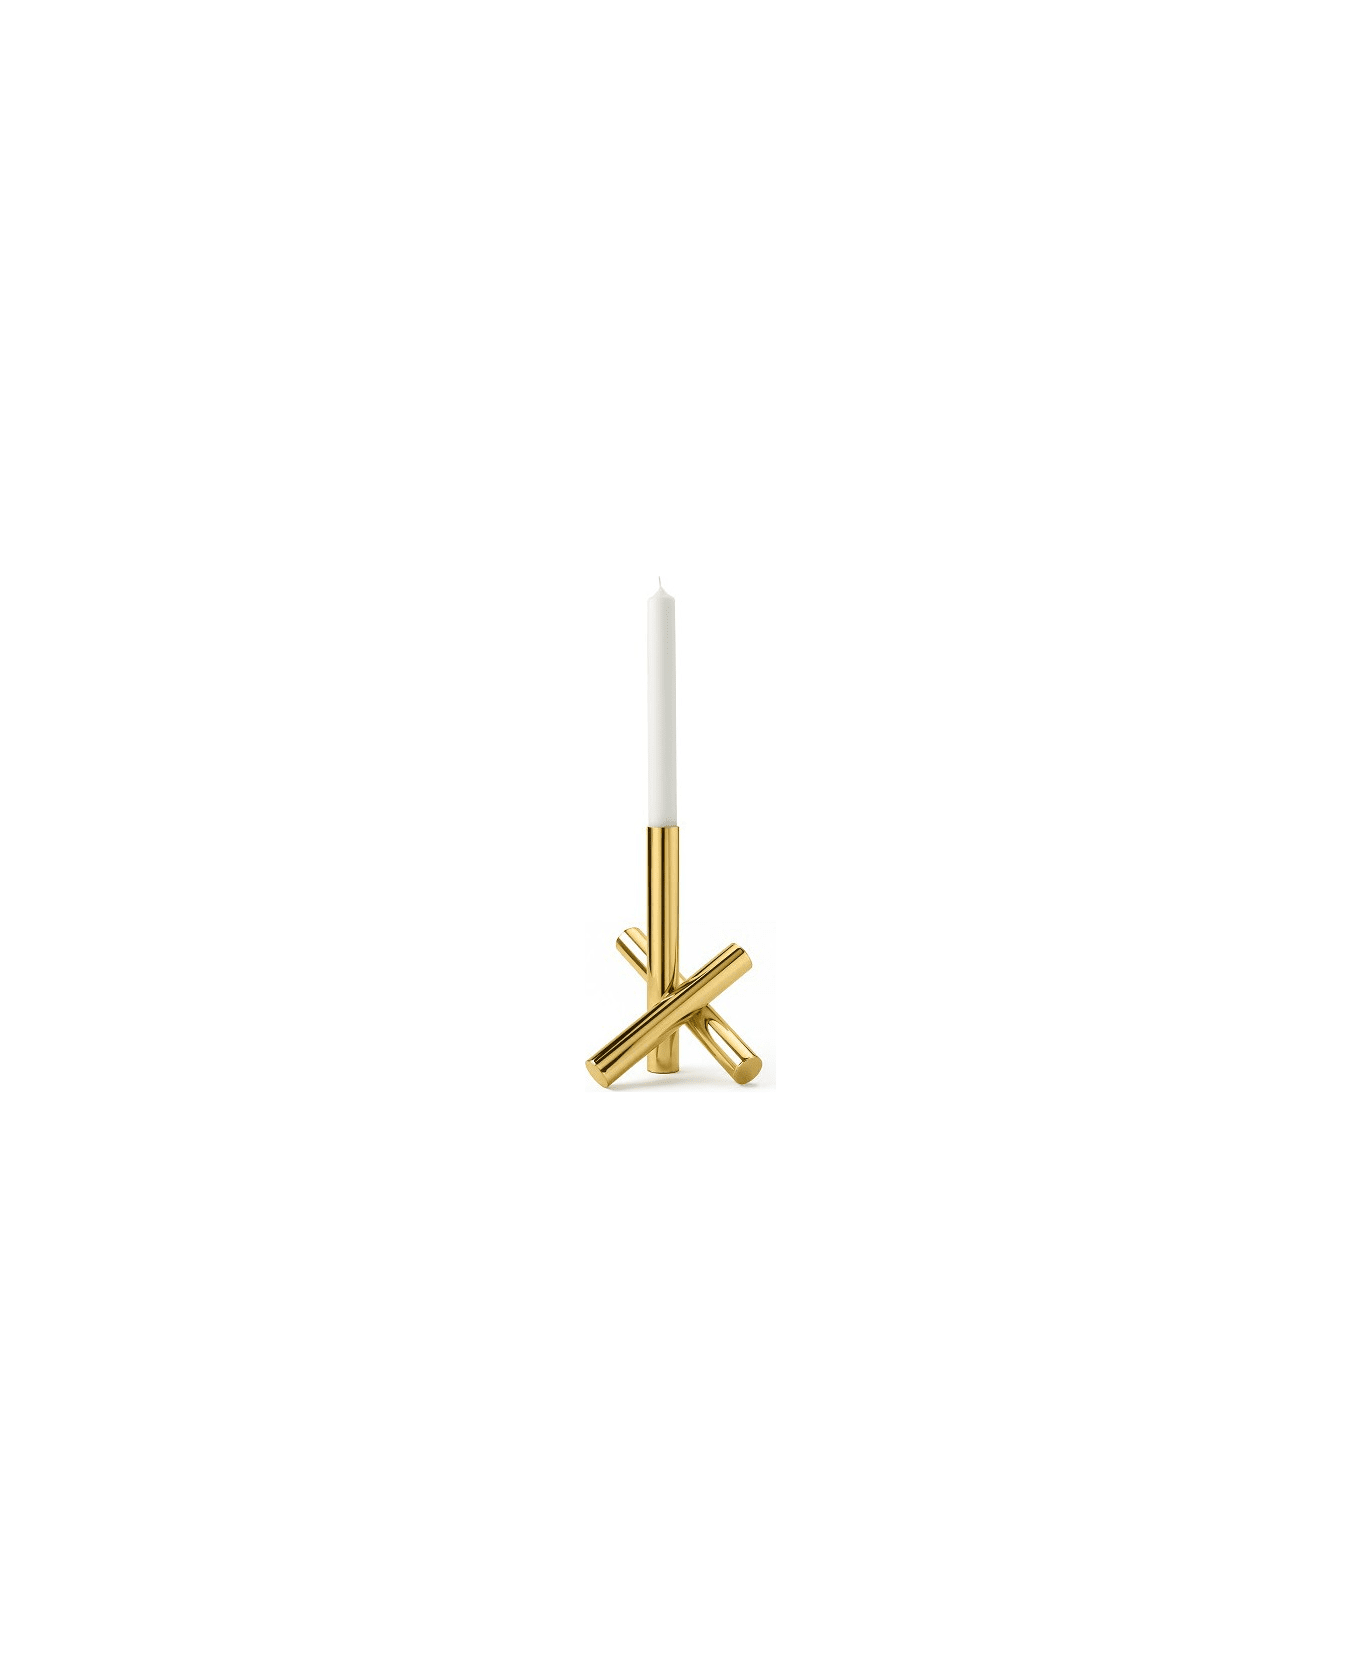 Ghidini 1961 Sticks - Candle Holder Polished Brass - Polished brass